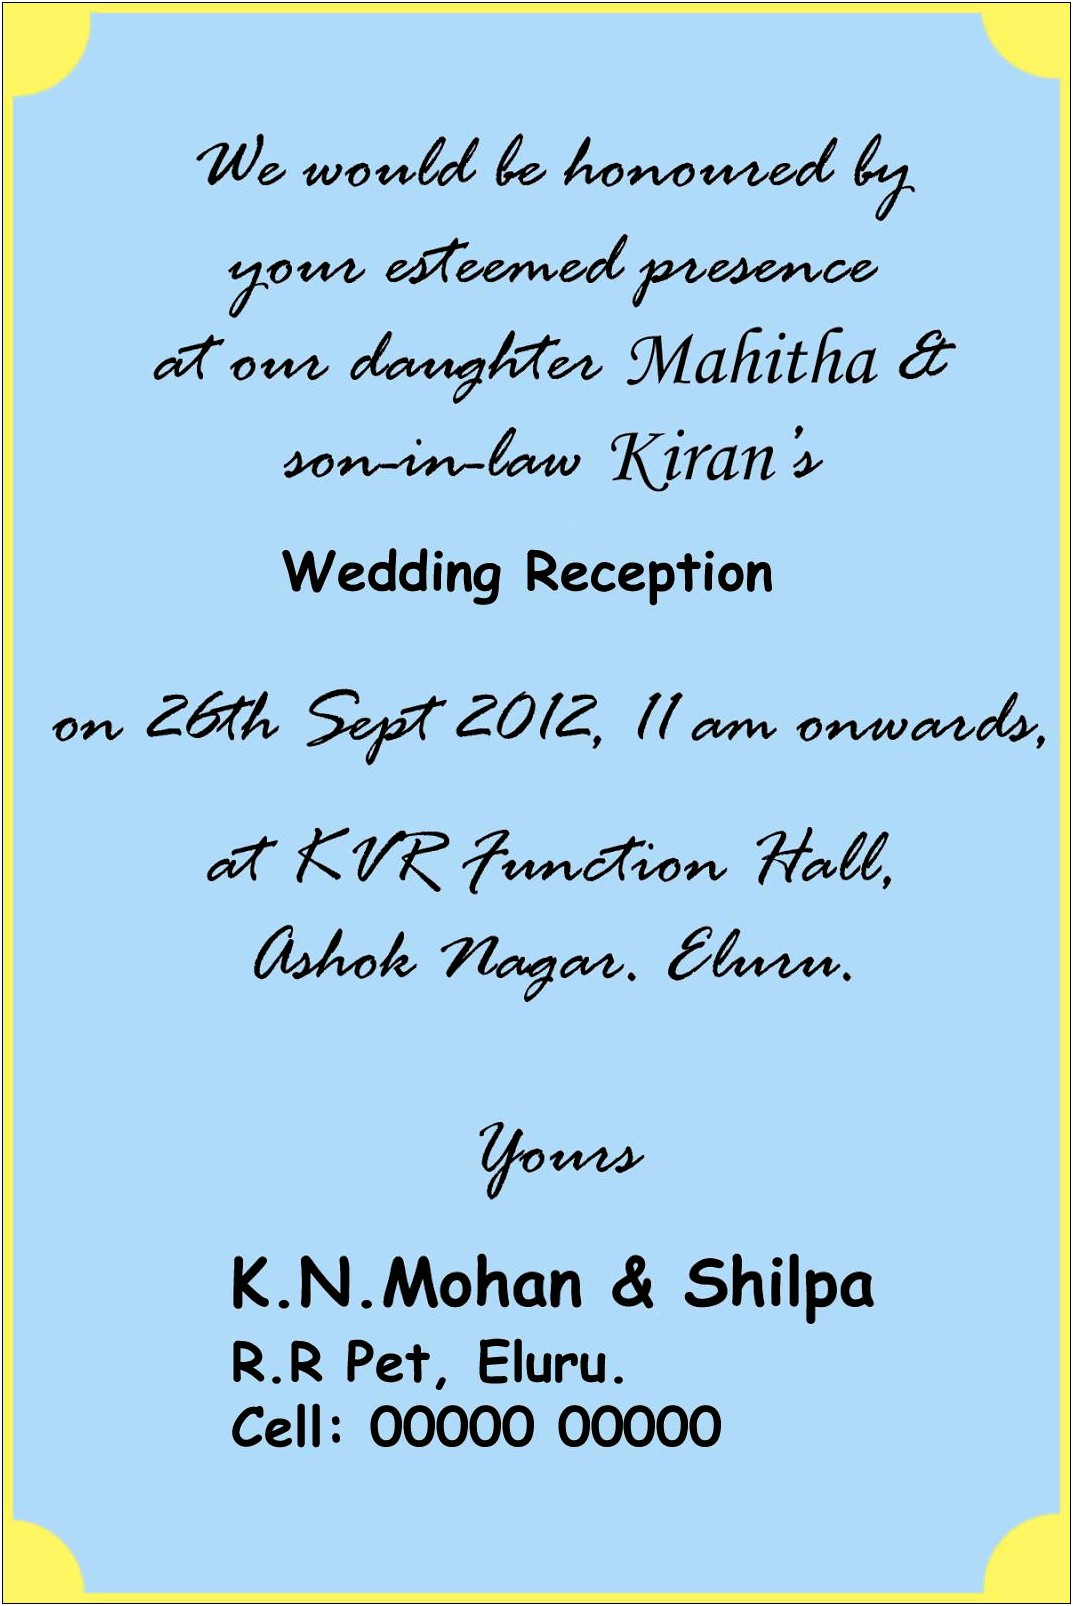 Hindu Wedding Invitation Wording Samples For Friends